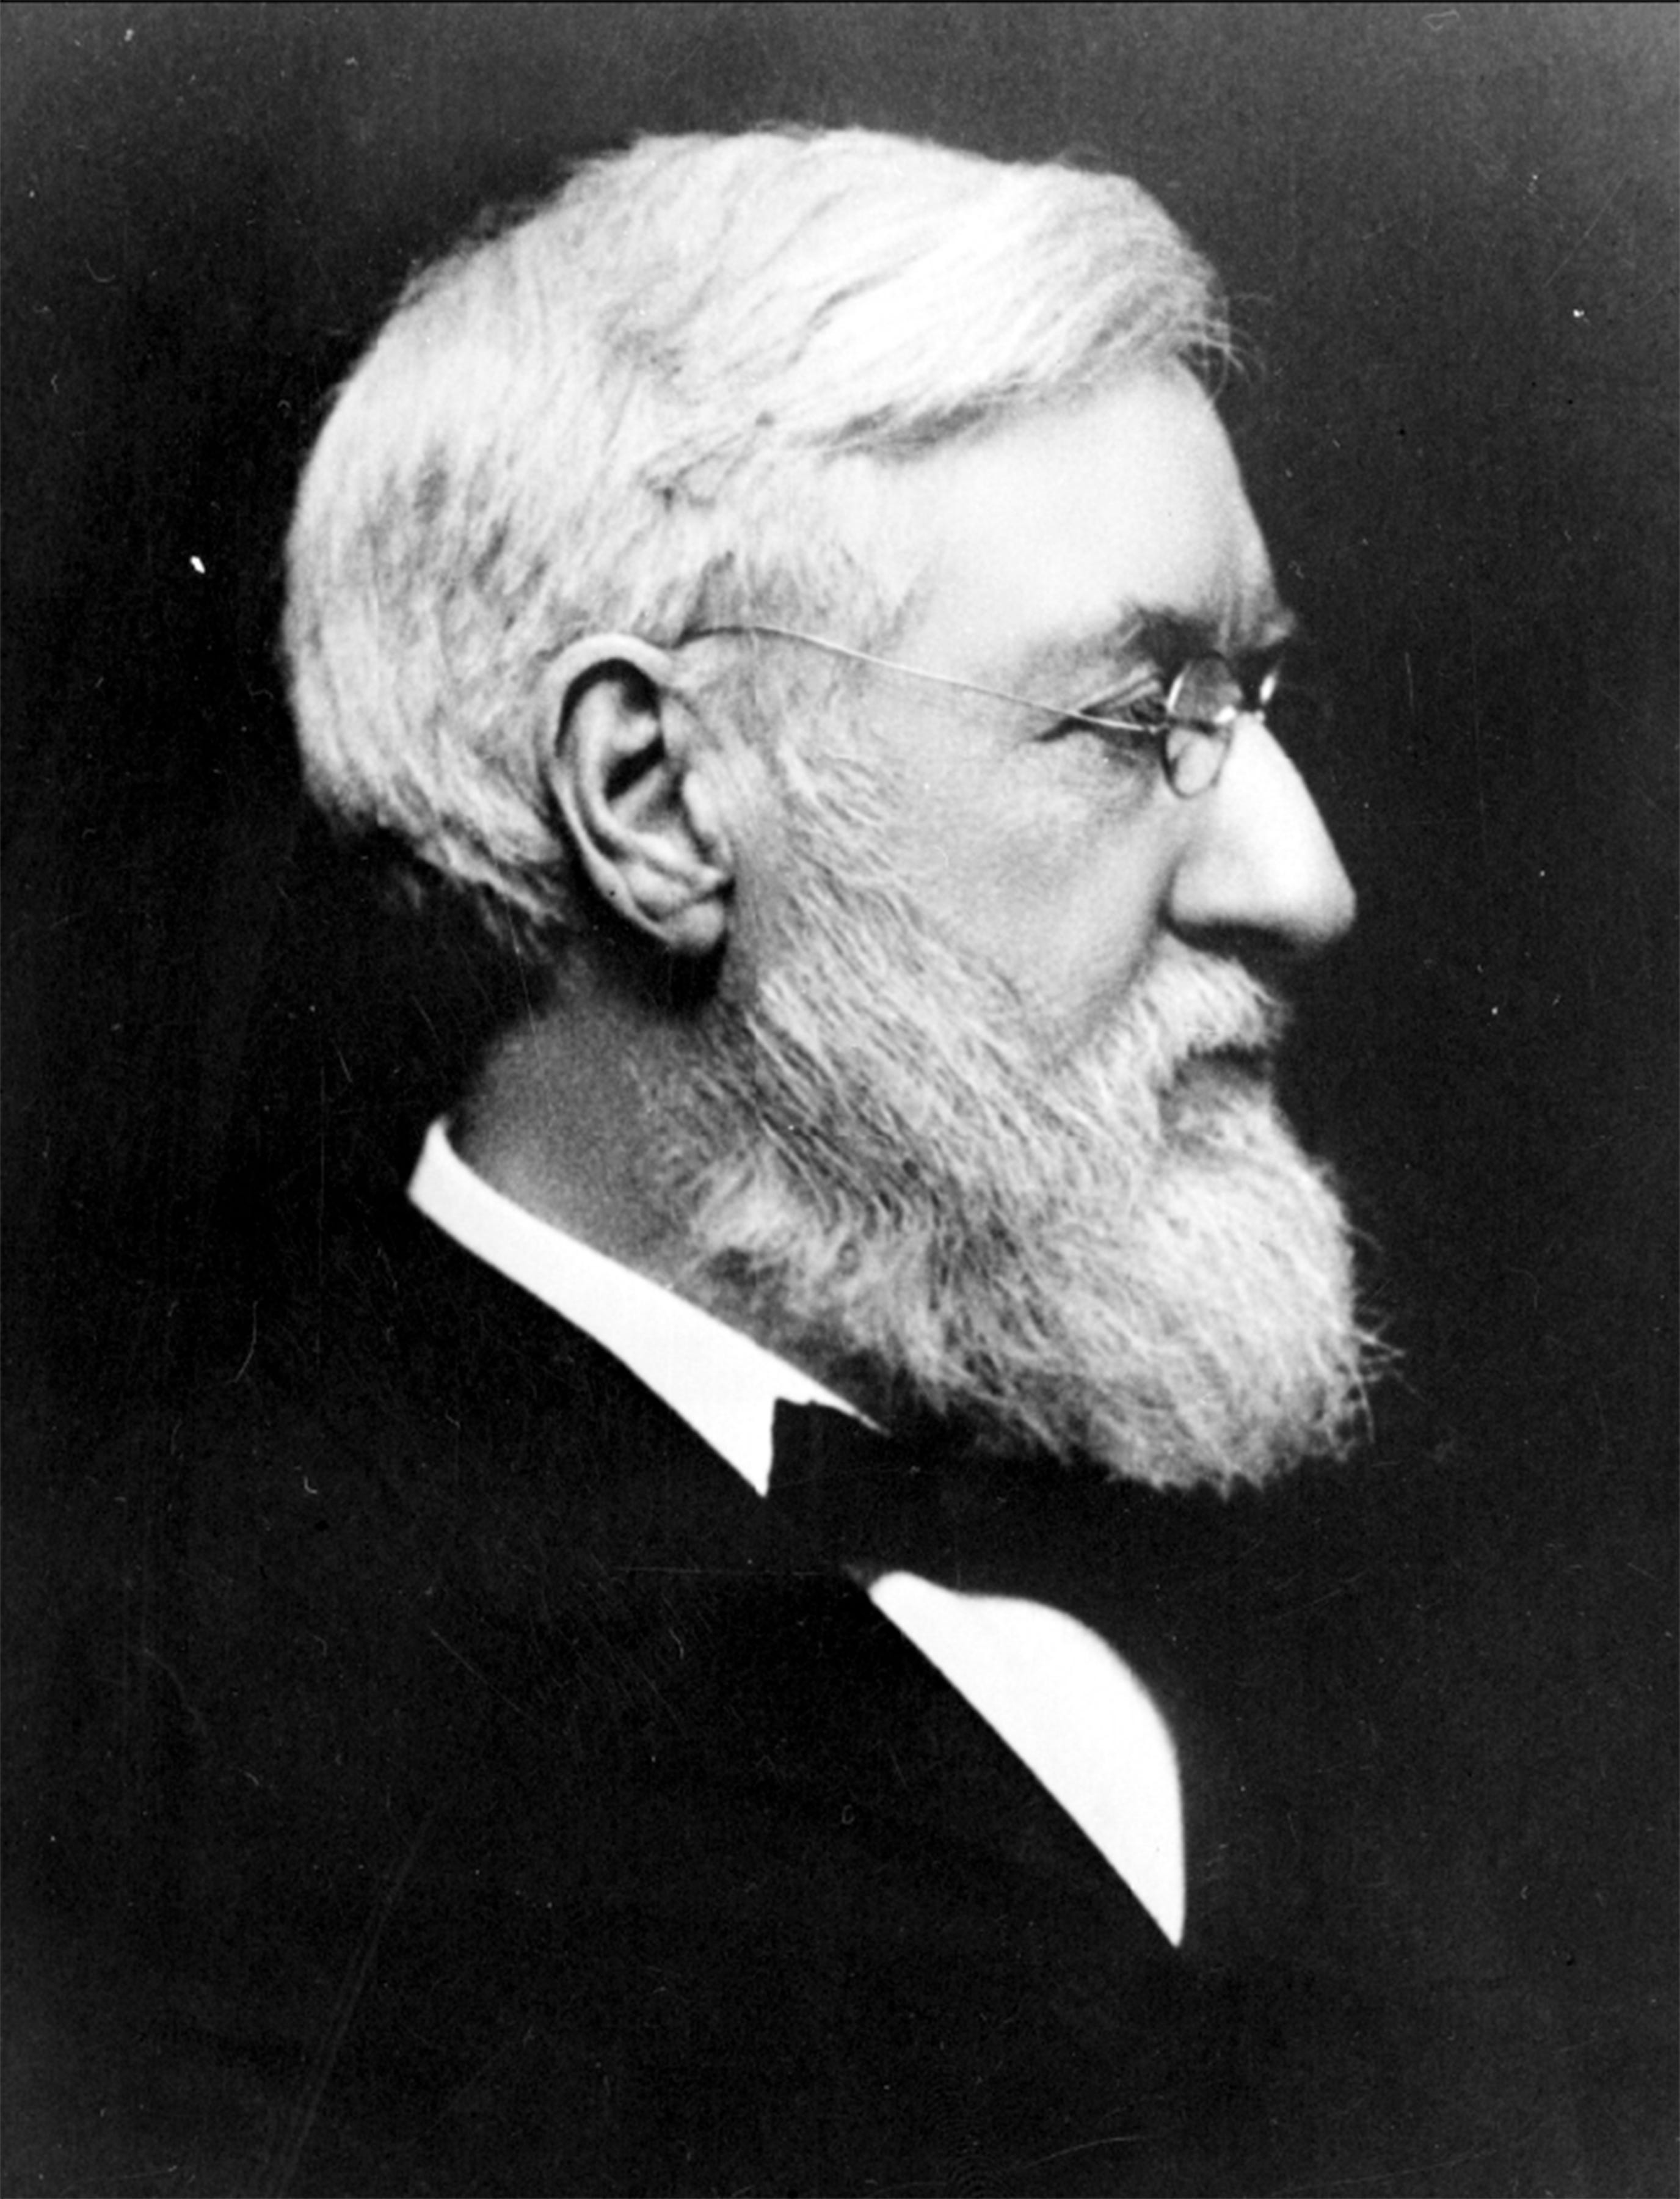 James E. Scripps, founder of The Detroit News.